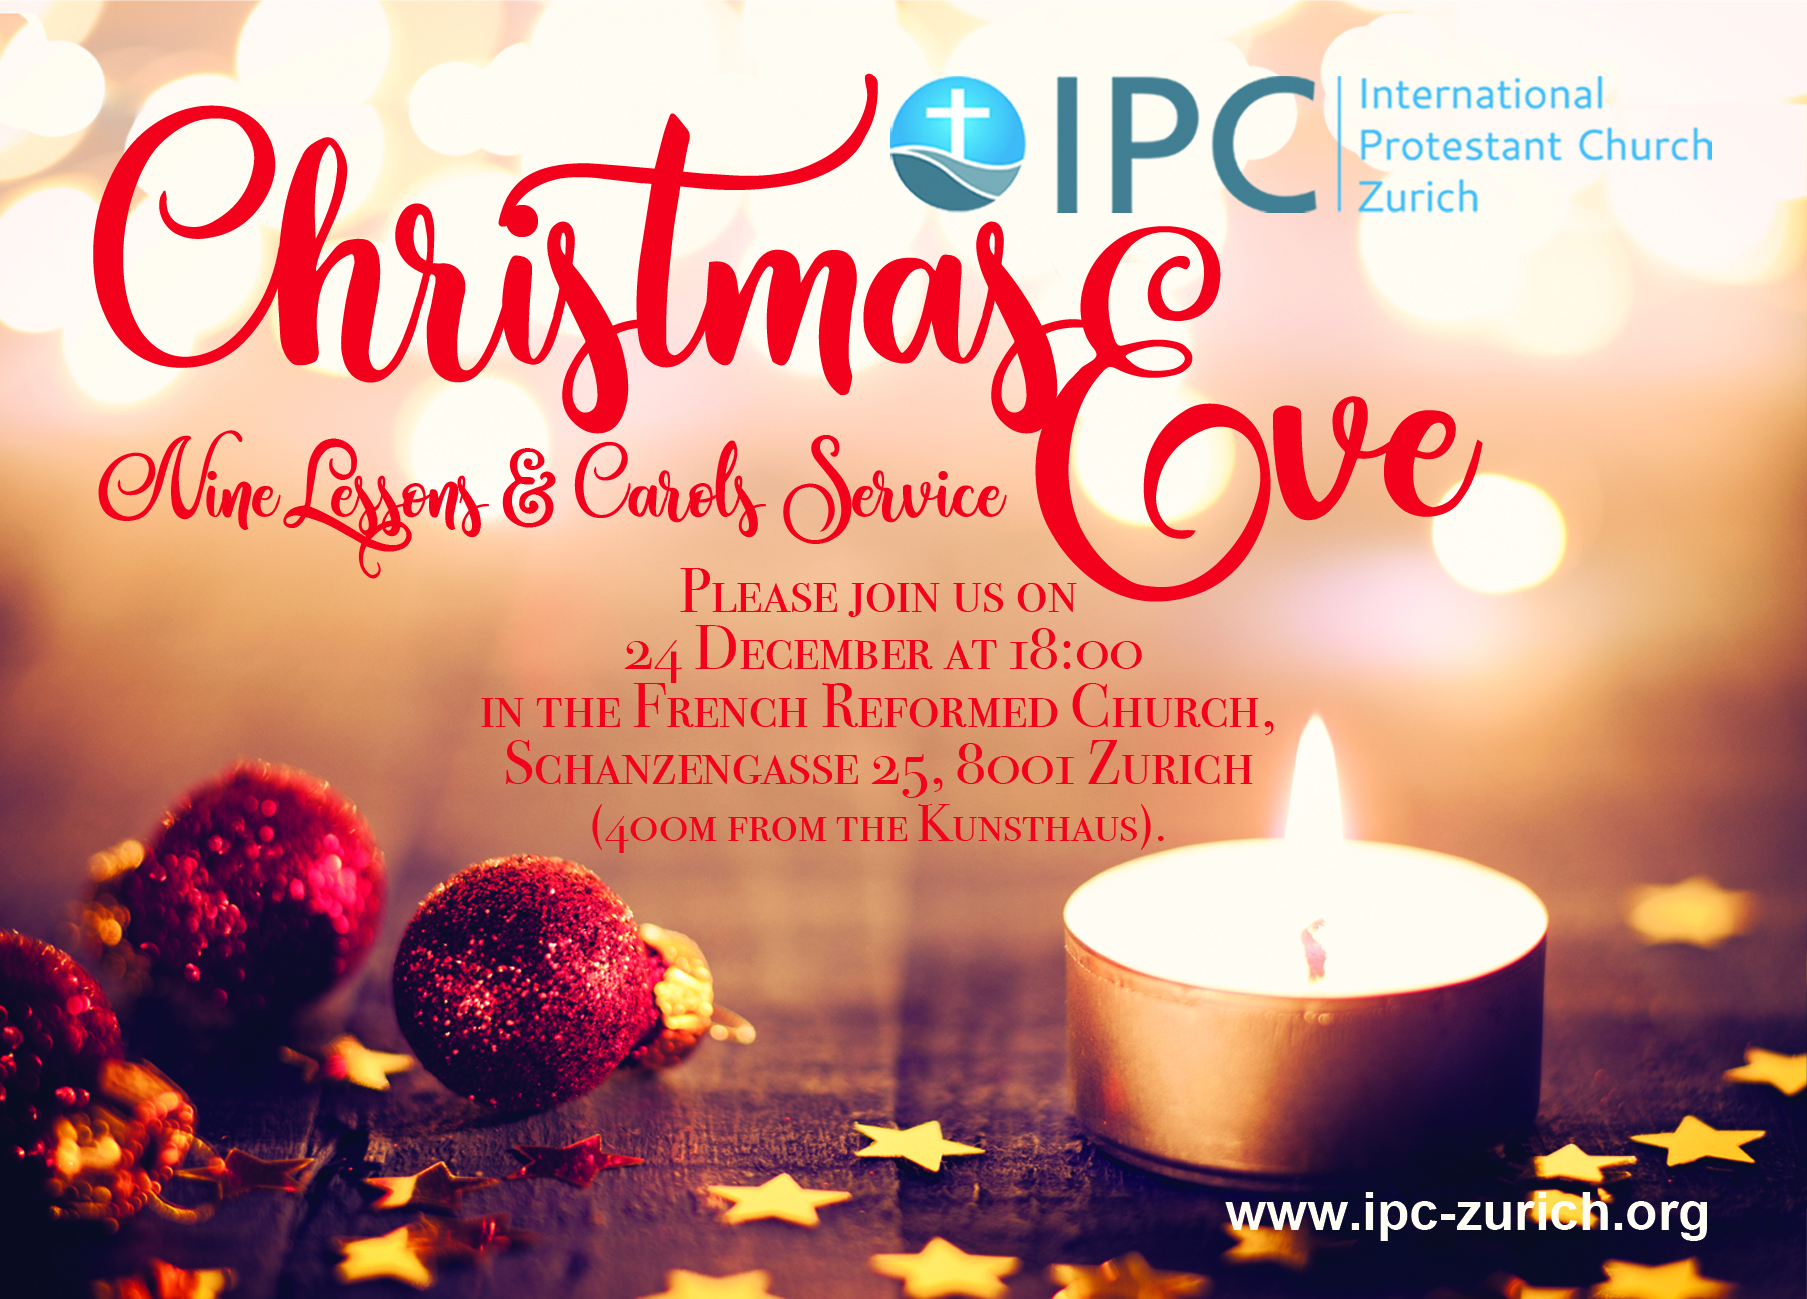 IPC Christmas Eve- datelessPOSTCARD image